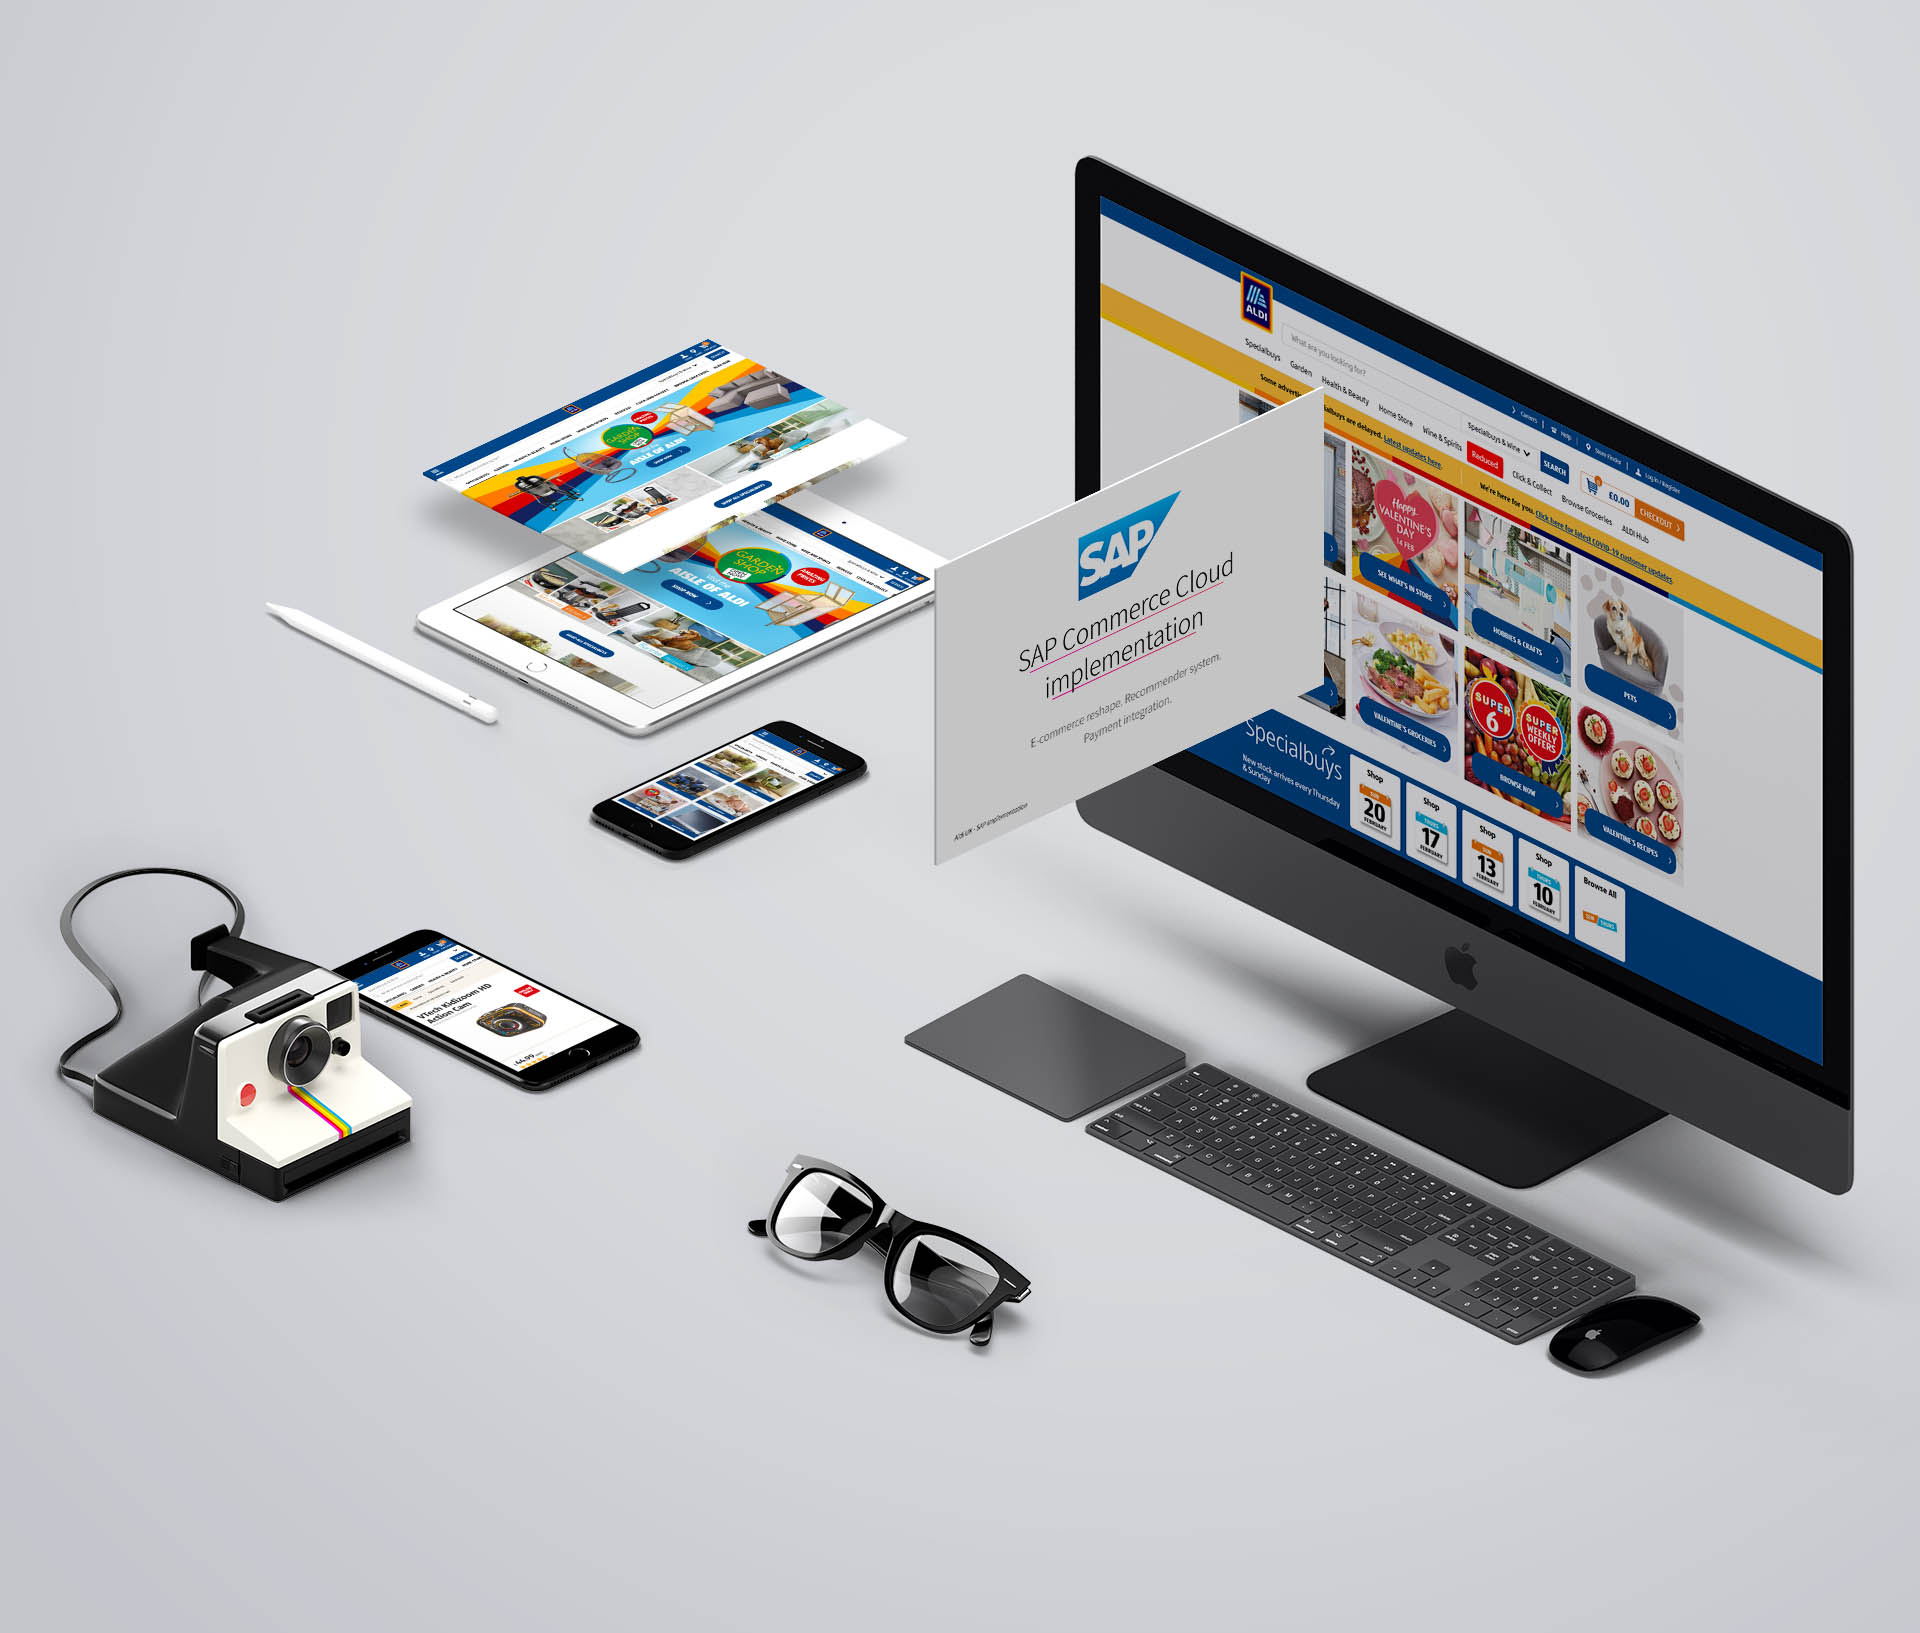 Aldi UK - E-commerce platform (SAP)